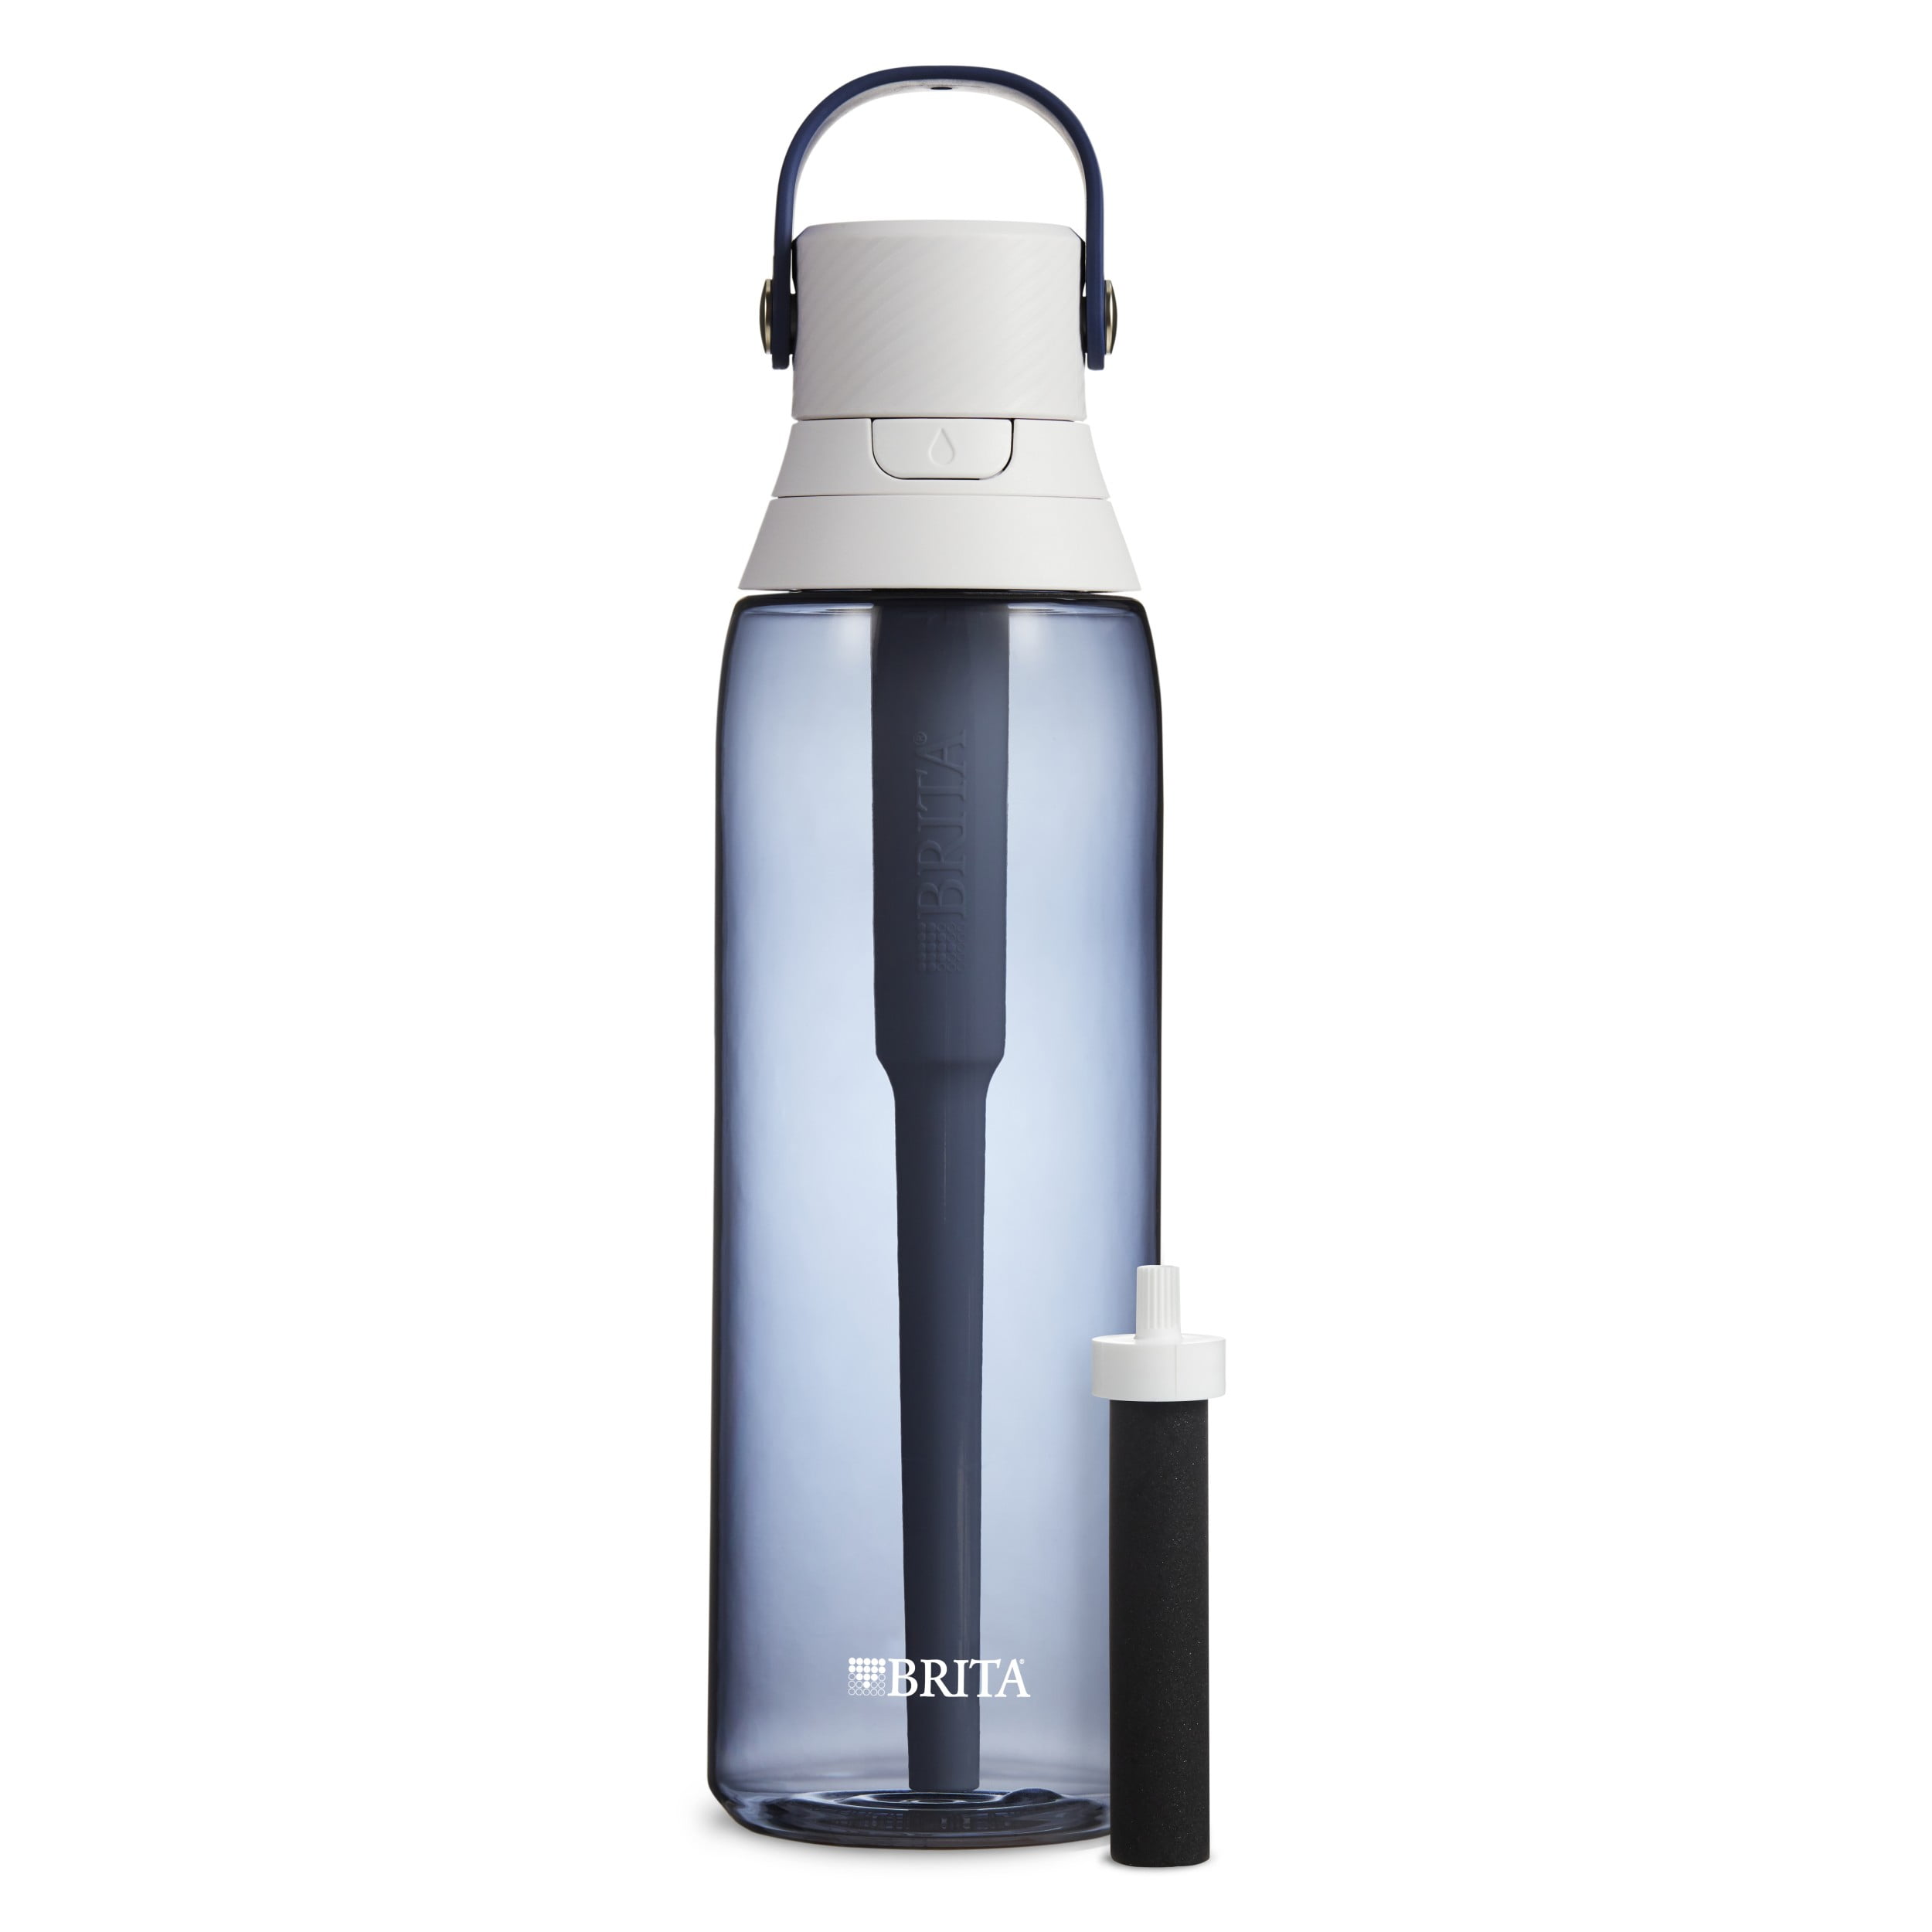 Brita Premium Leak Proof Filtered Water Bottle, Night Sky, 26 fl oz